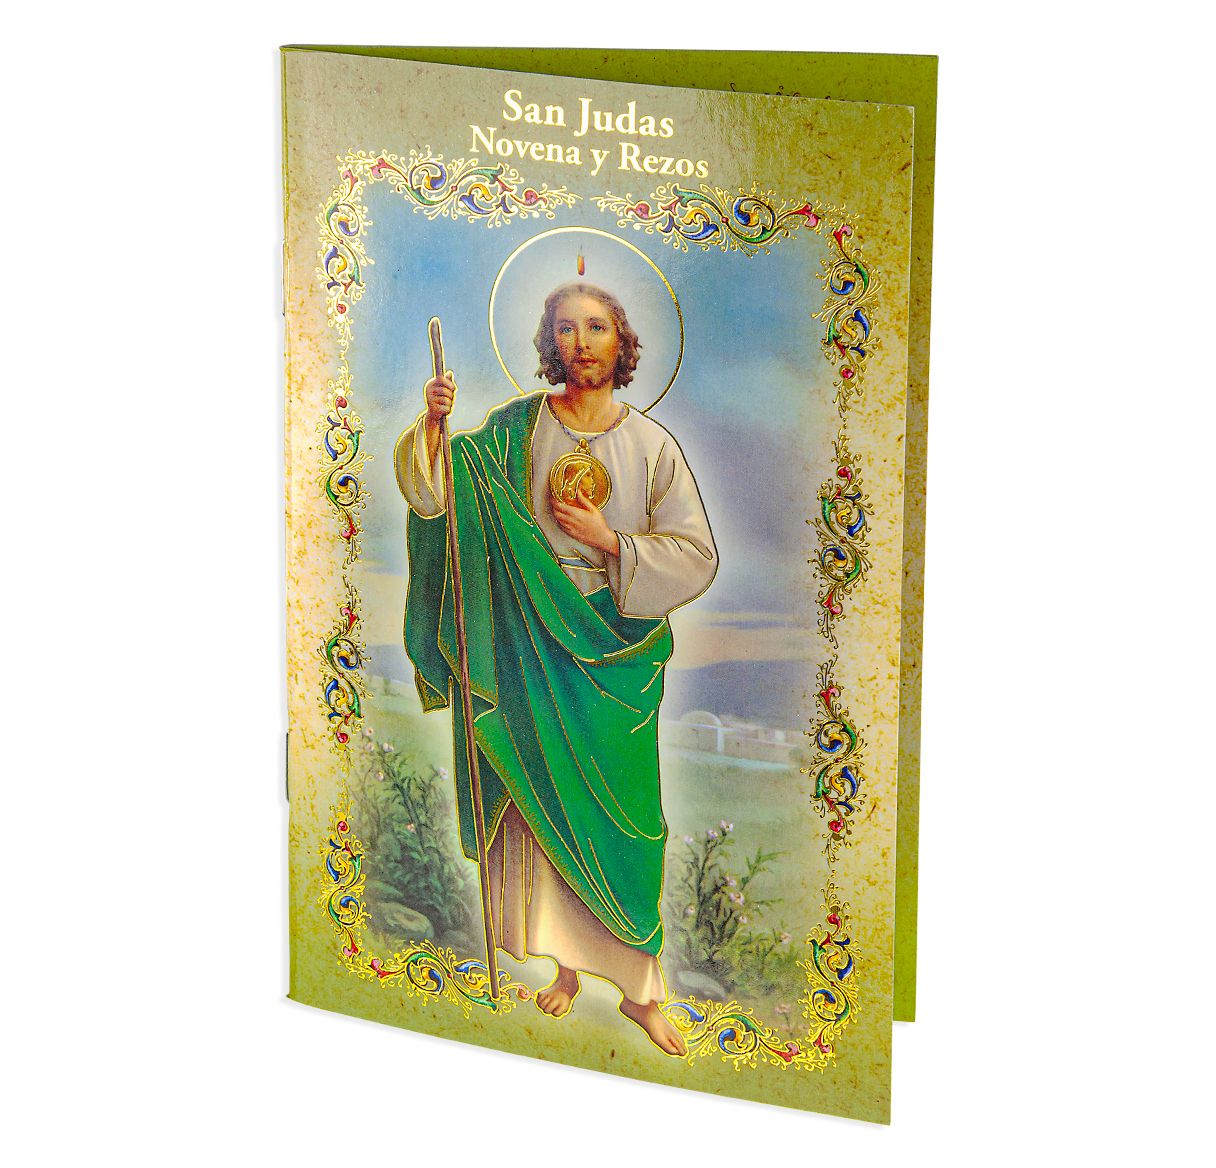 Saint Jude Novena Book